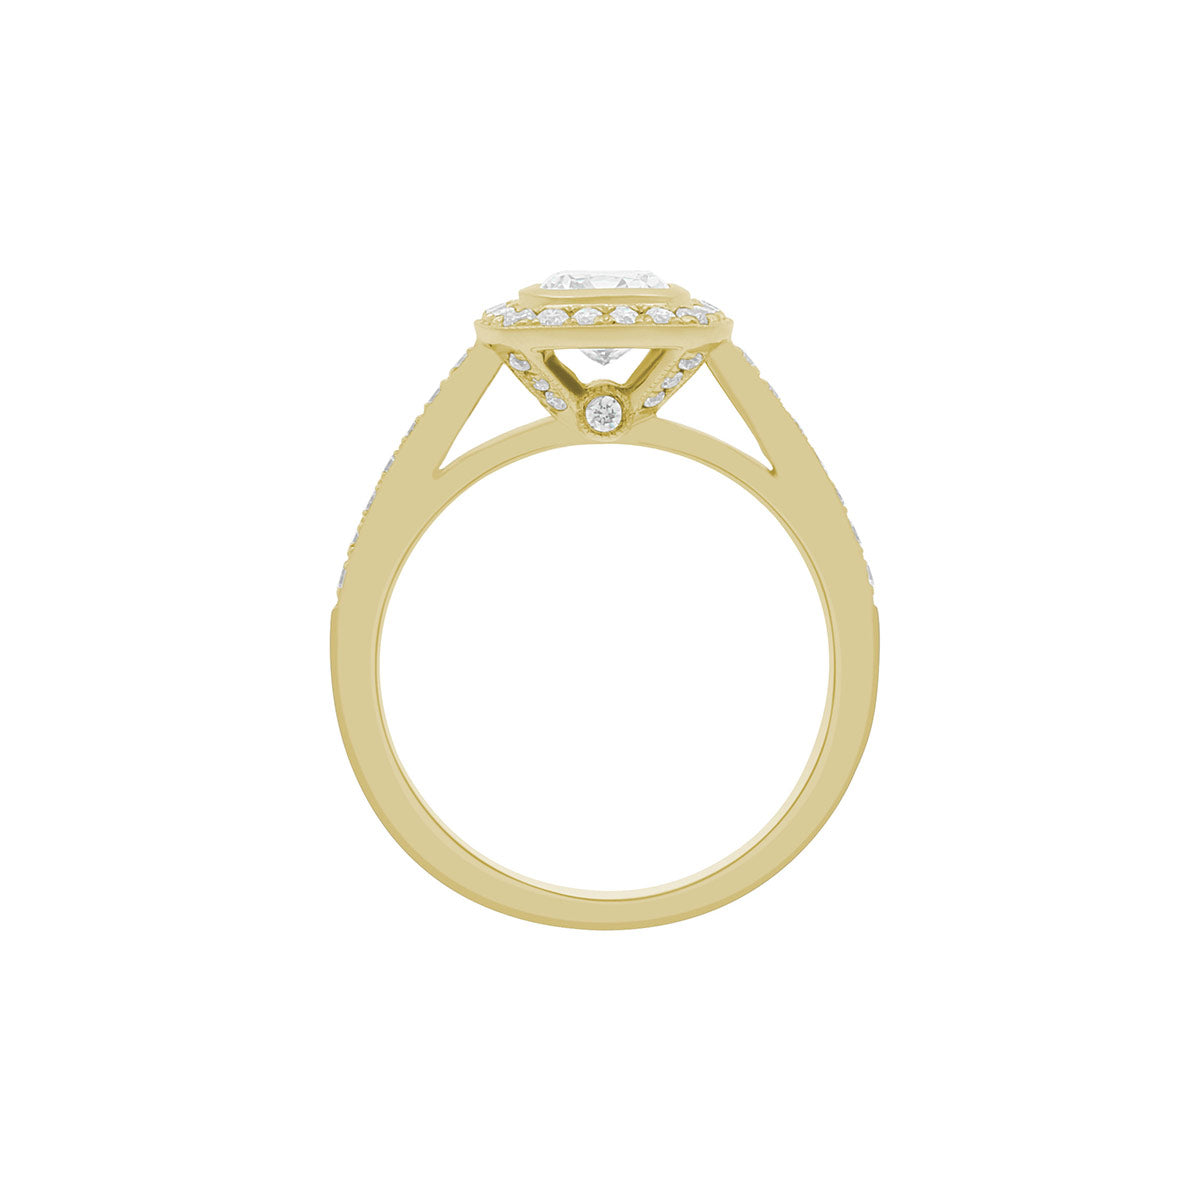 Bezel Set Cushion Cut Engagement Ring in yellow gold standingupright